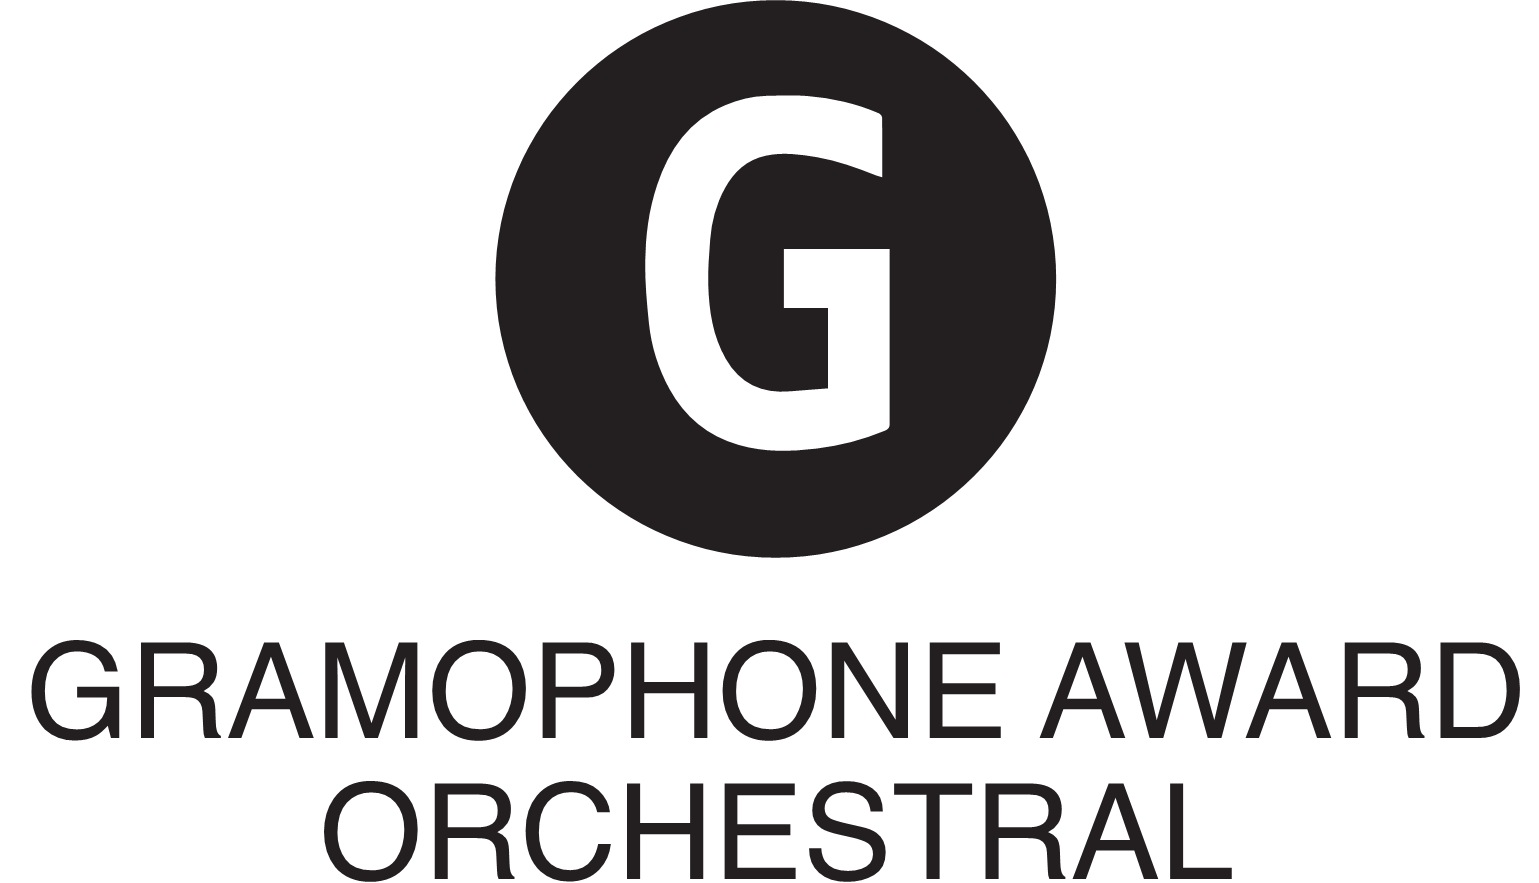 Gramophone Award: 'Orchestral' (2011)